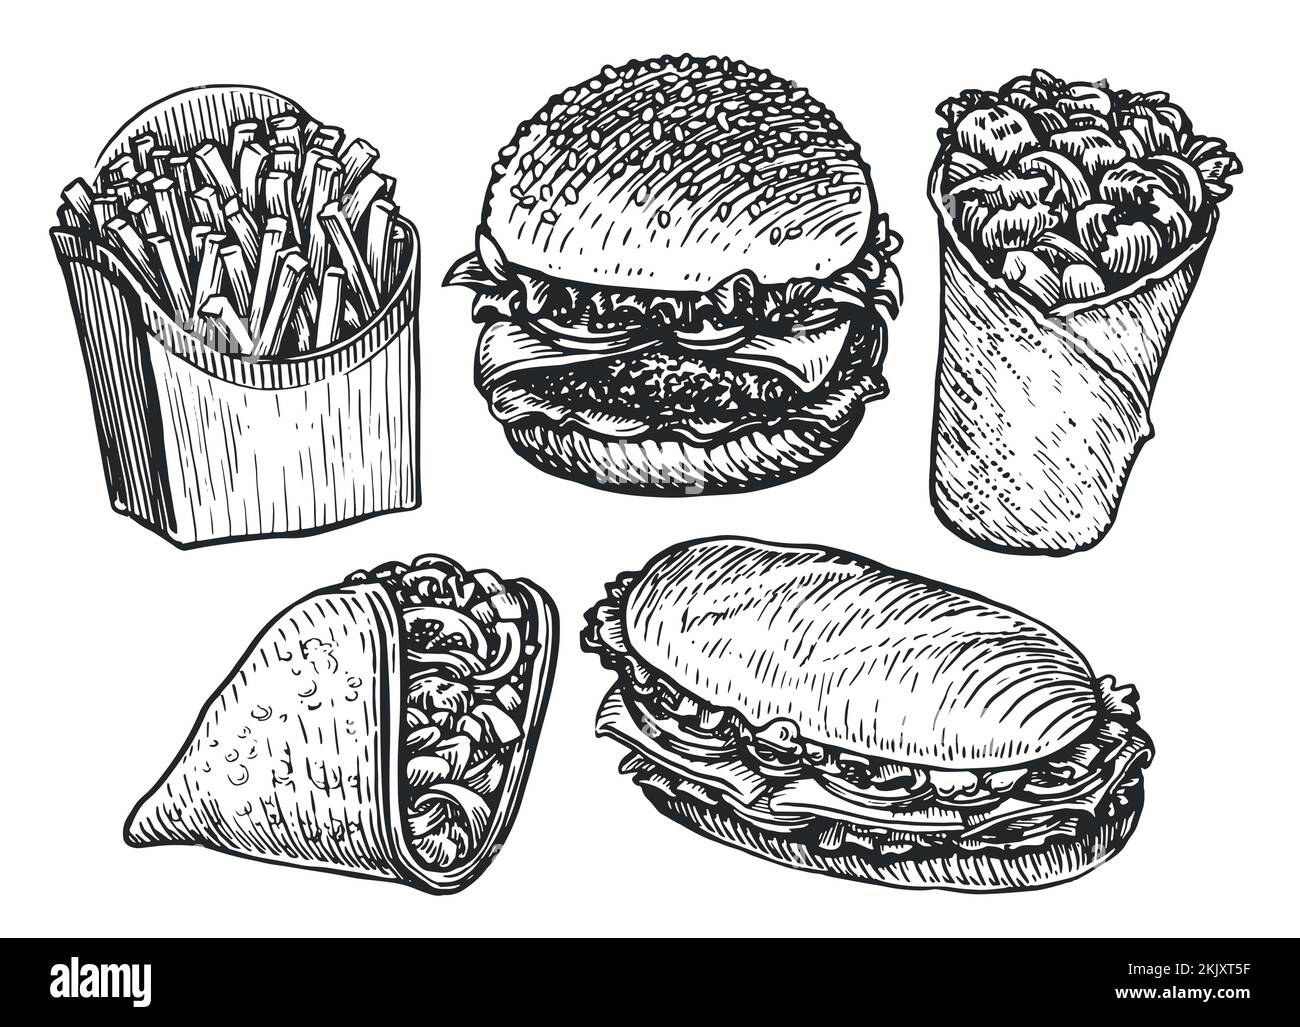 Croquis de la série Fast Food. Hamburger, frites, burrito, sandwich, tacos. Illustration de vecteur de concept de nourriture de rue, à emporter Illustration de Vecteur